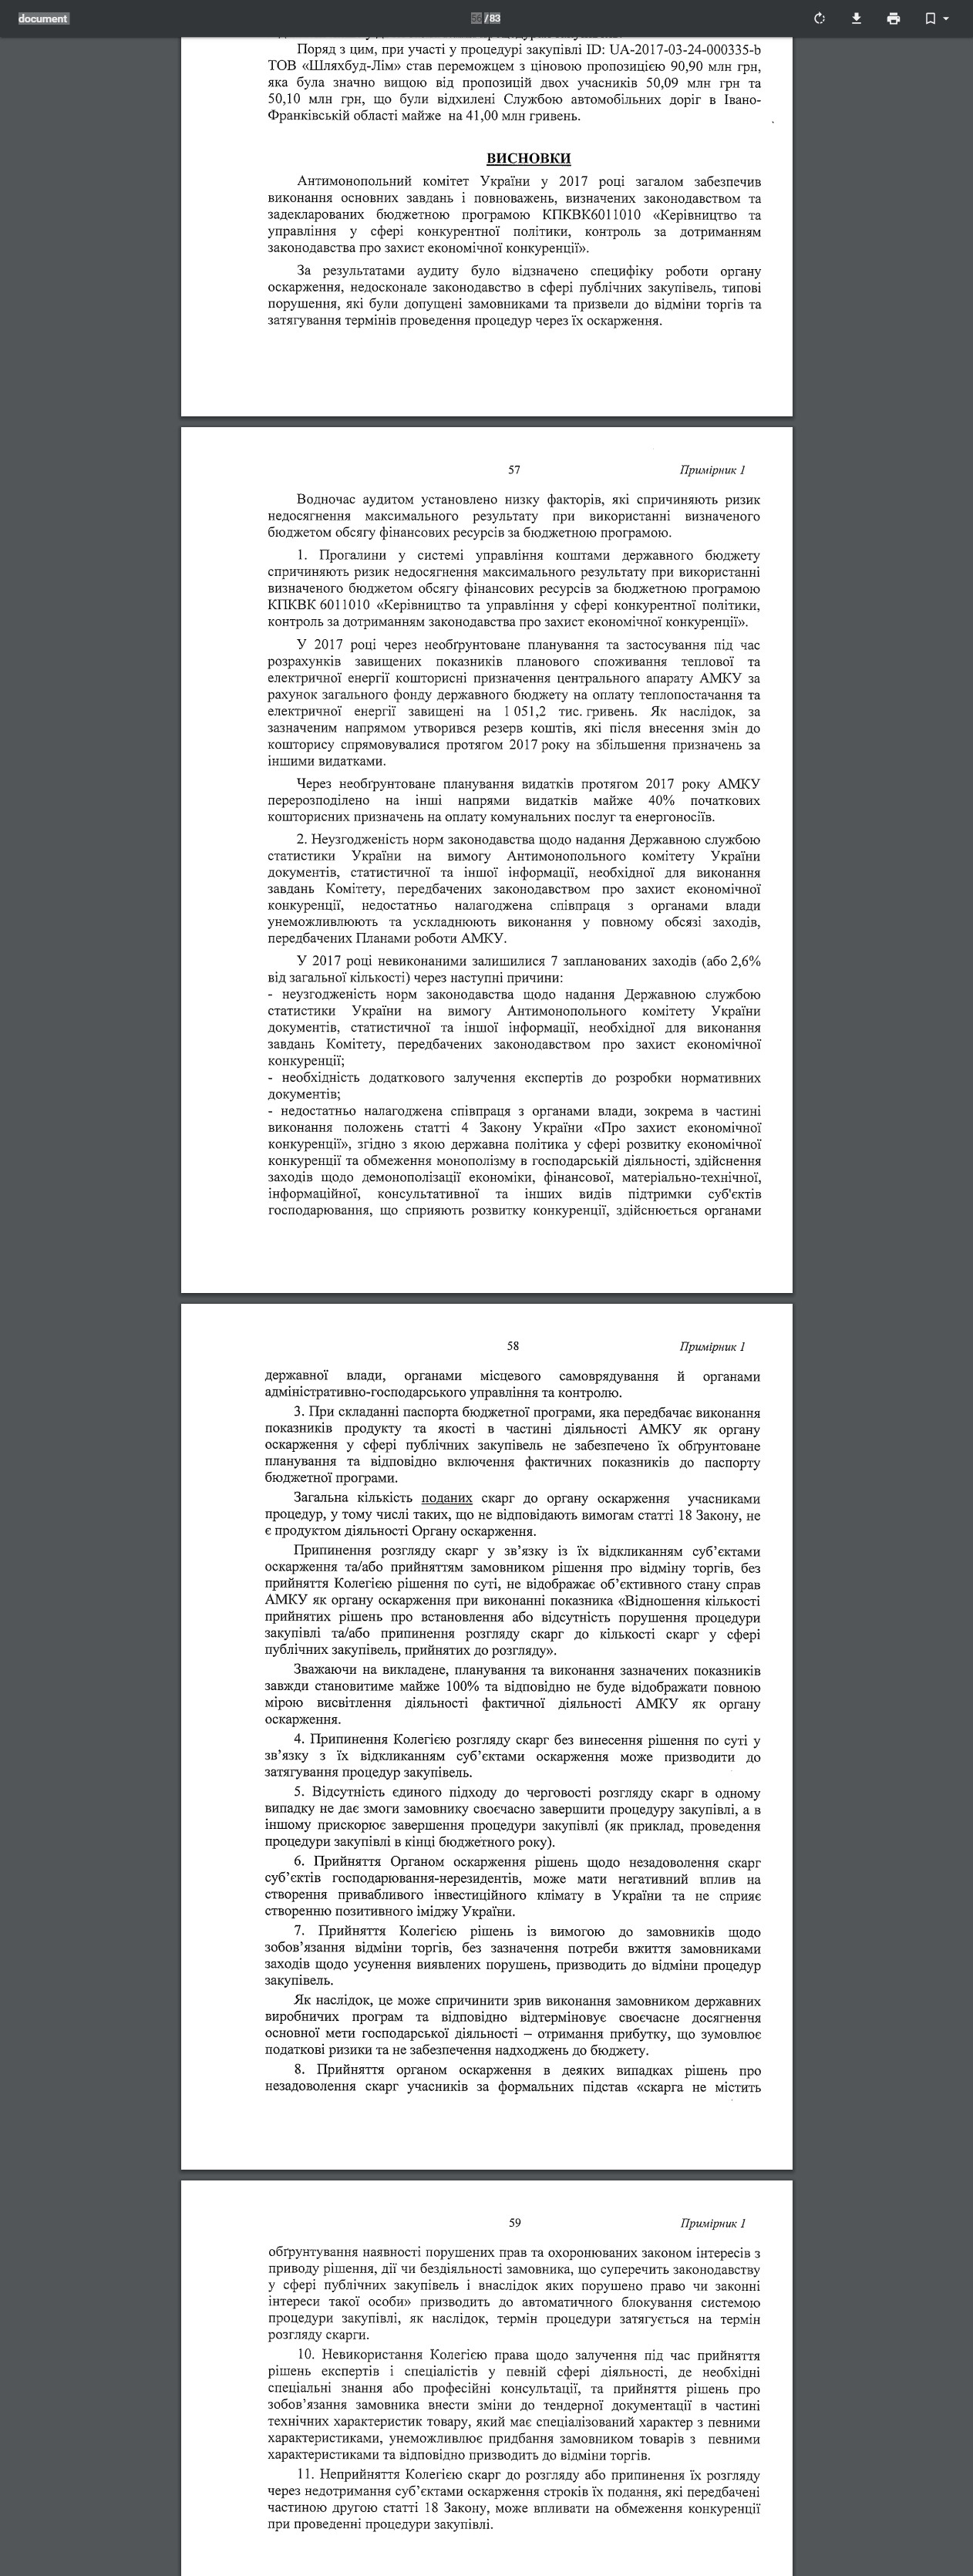 http://dkrs.kmu.gov.ua/kru/doccatalog/document?id=145659